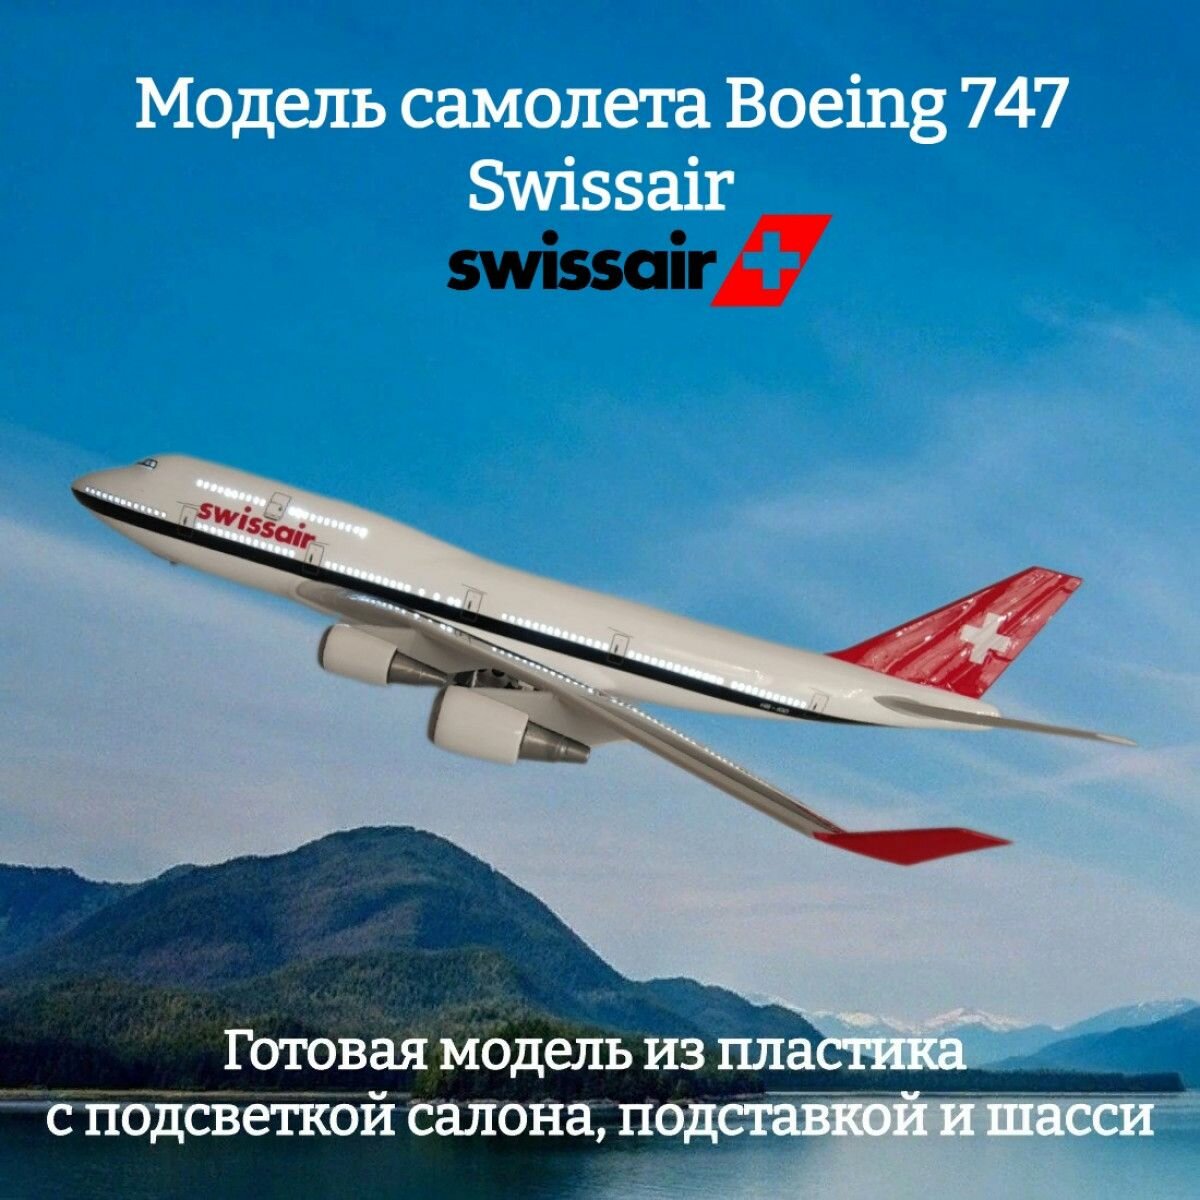 Модель самолета Boeing 747 Swissair 1:160 (с подсветкой салона)